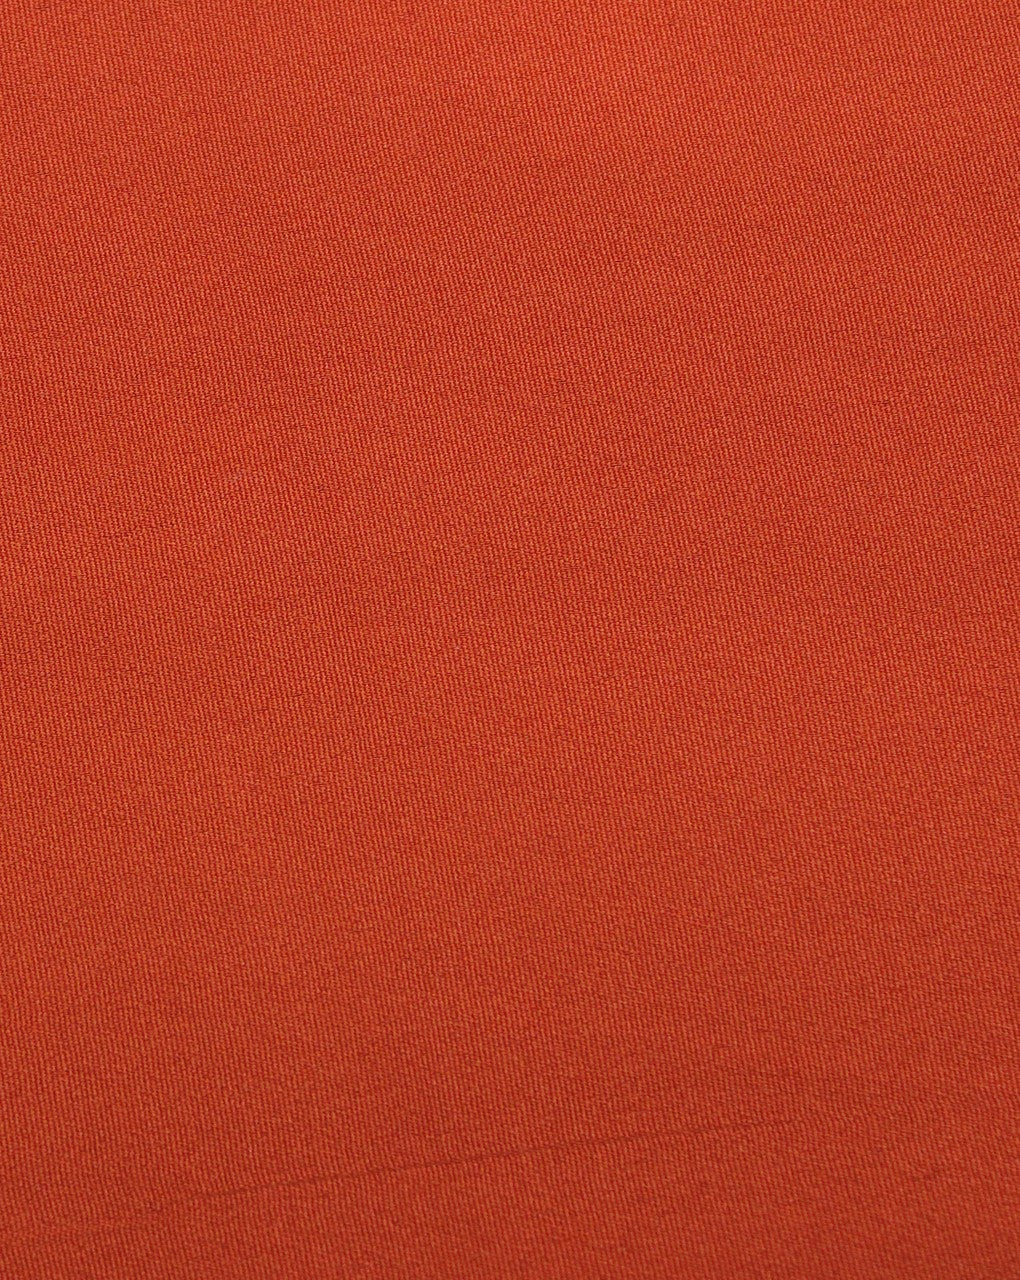 Plain Rust Polyester Crepe Fabric